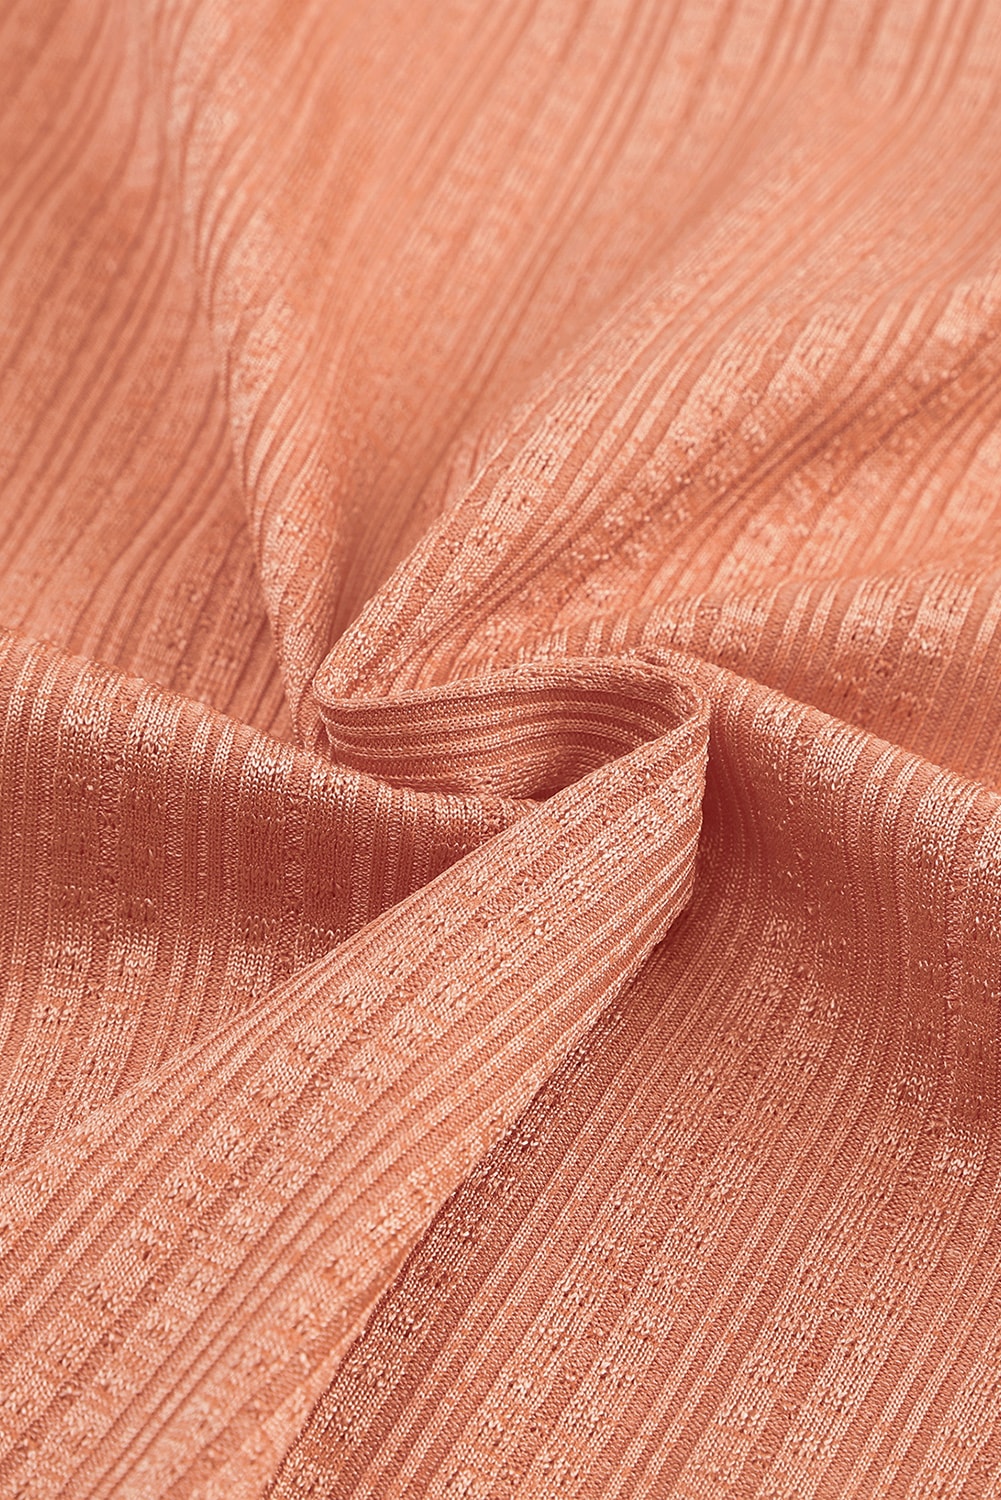 Narančasti široki gornji dio s teksturiranim prednjim dijelom s V izrezom i kopčanjem